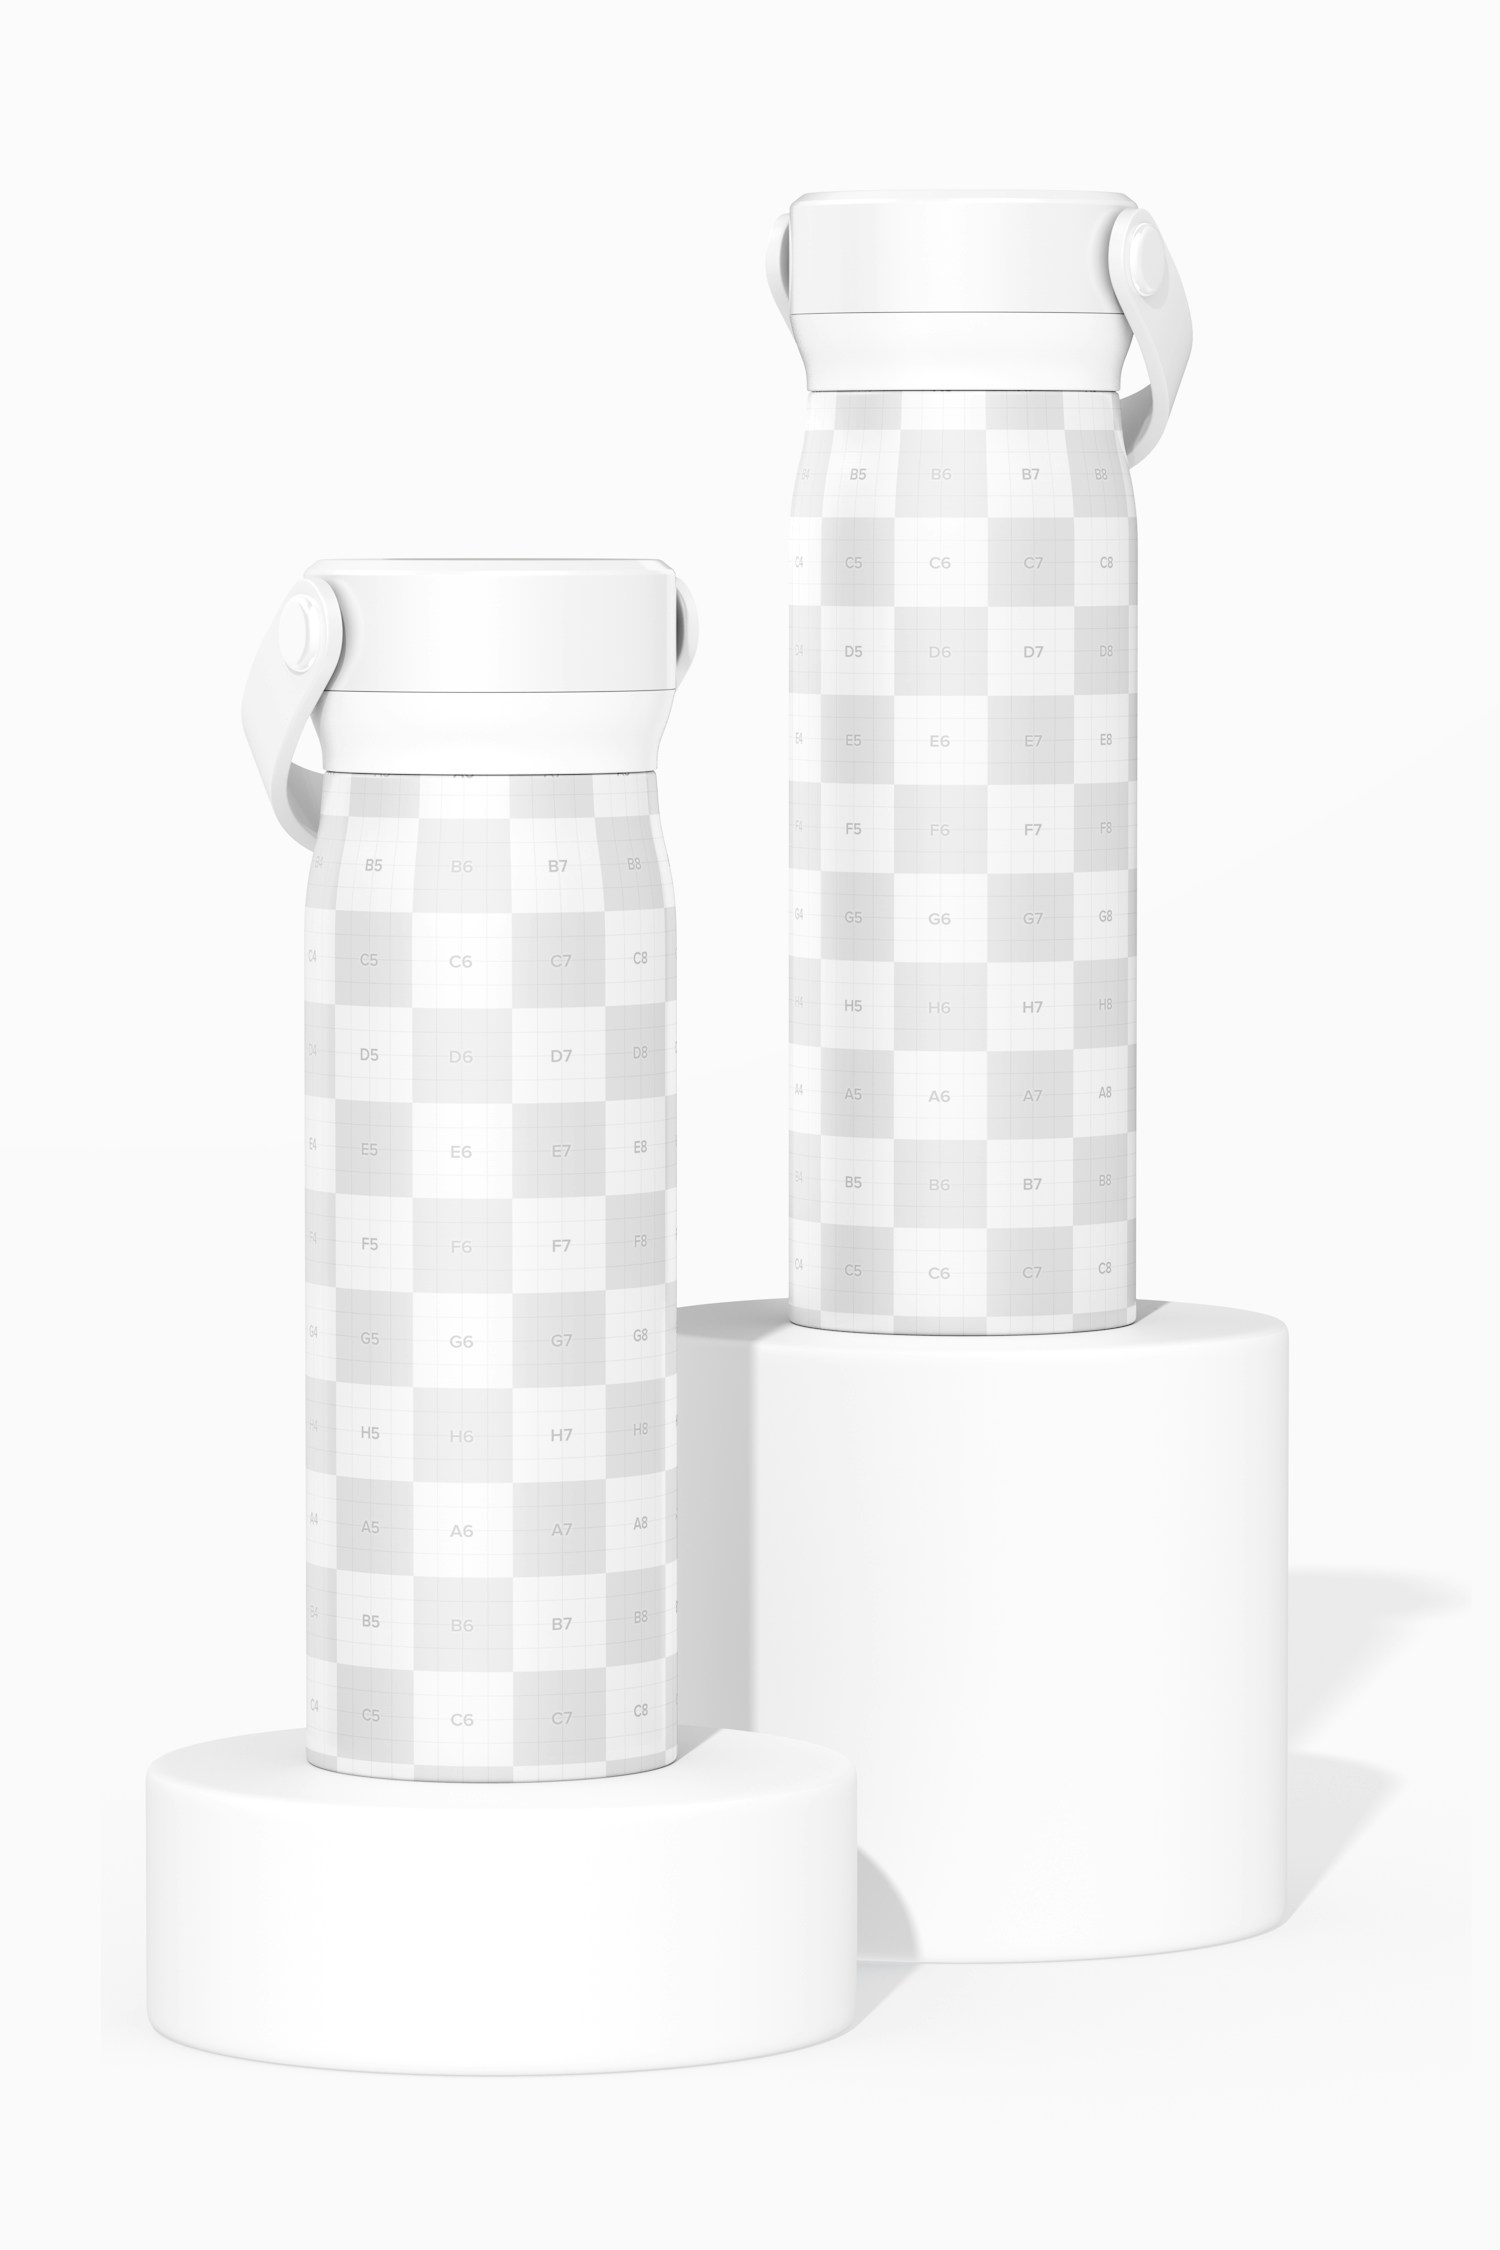 20 oz Water Bottles Mockup, on Podium